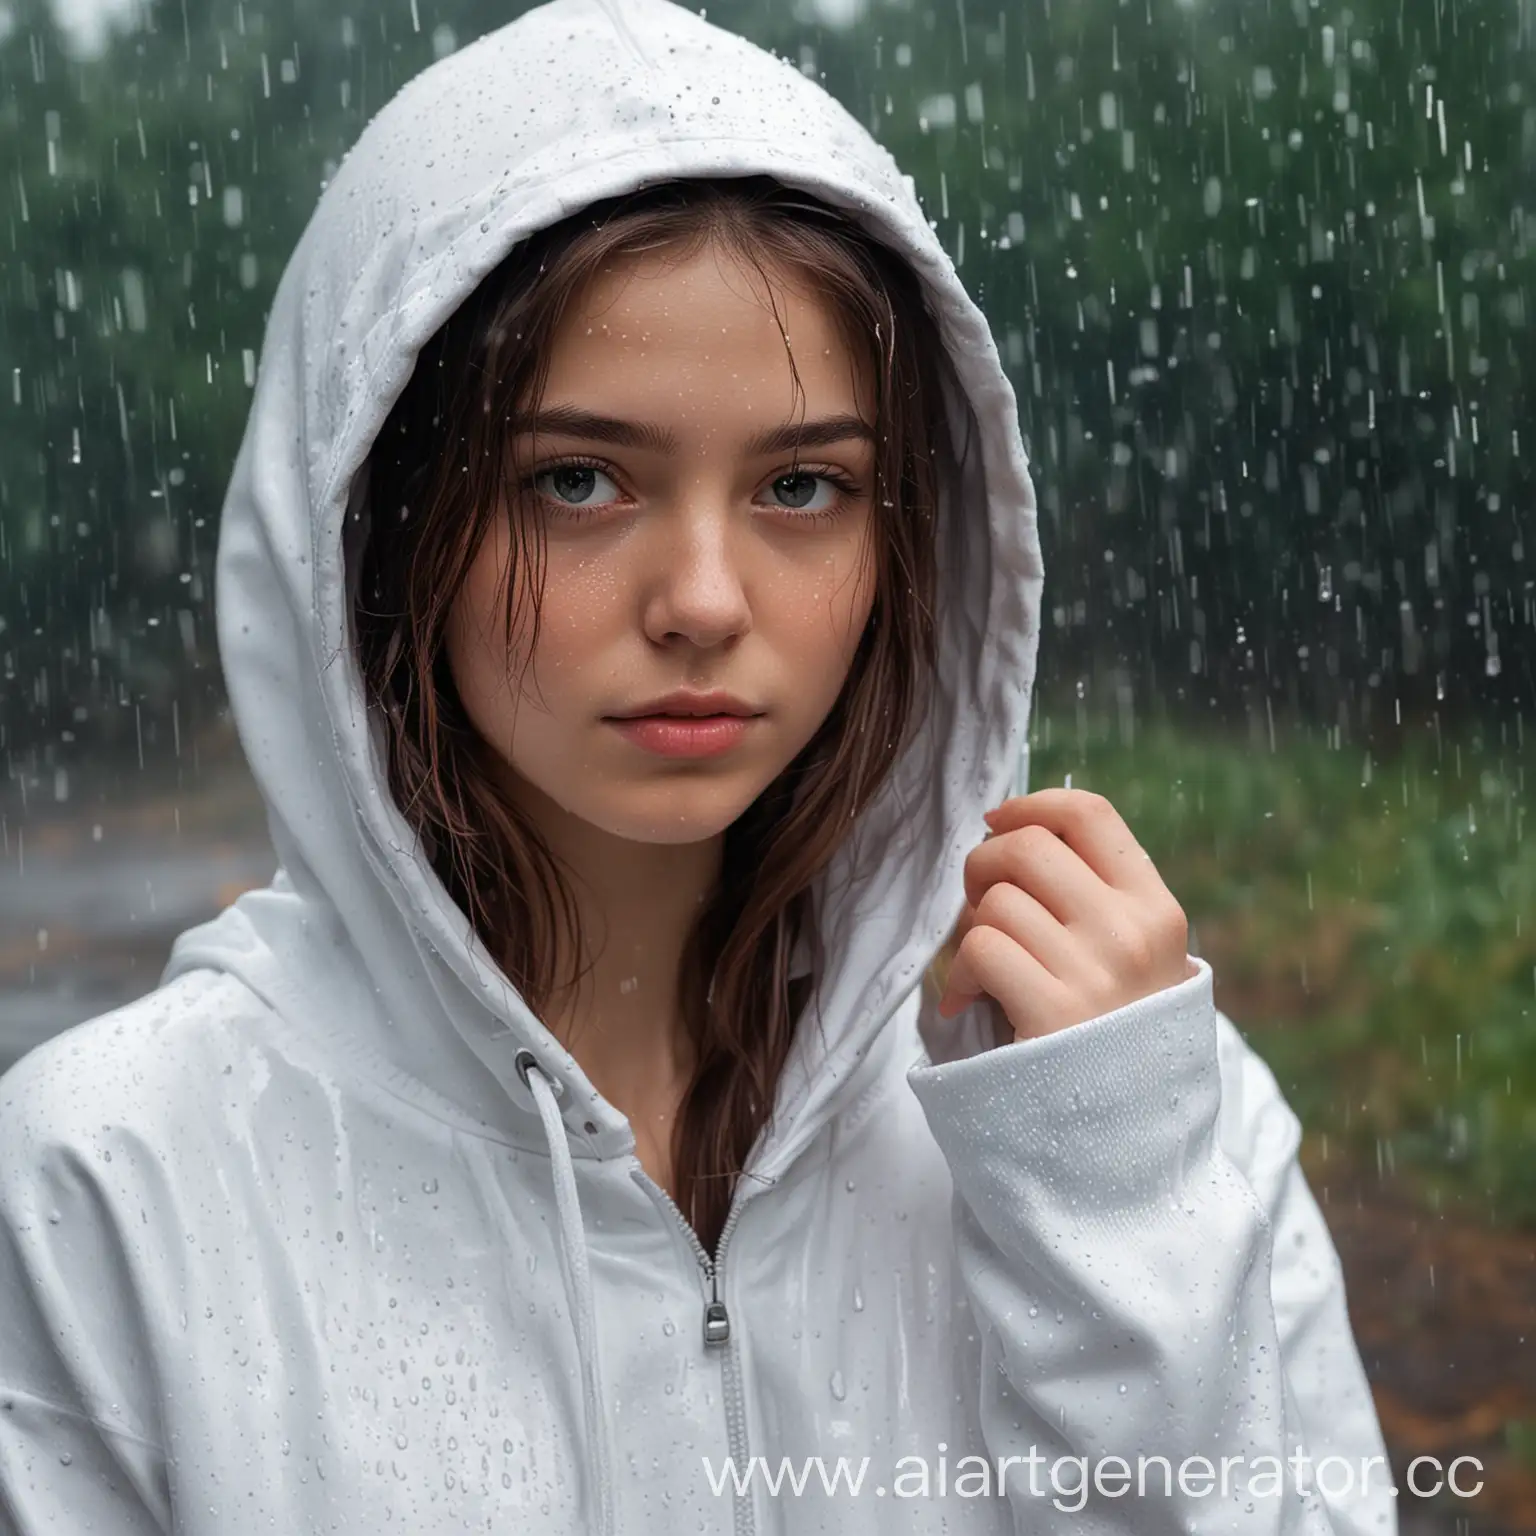 Girl-in-White-Hoodie-Standing-in-Rain